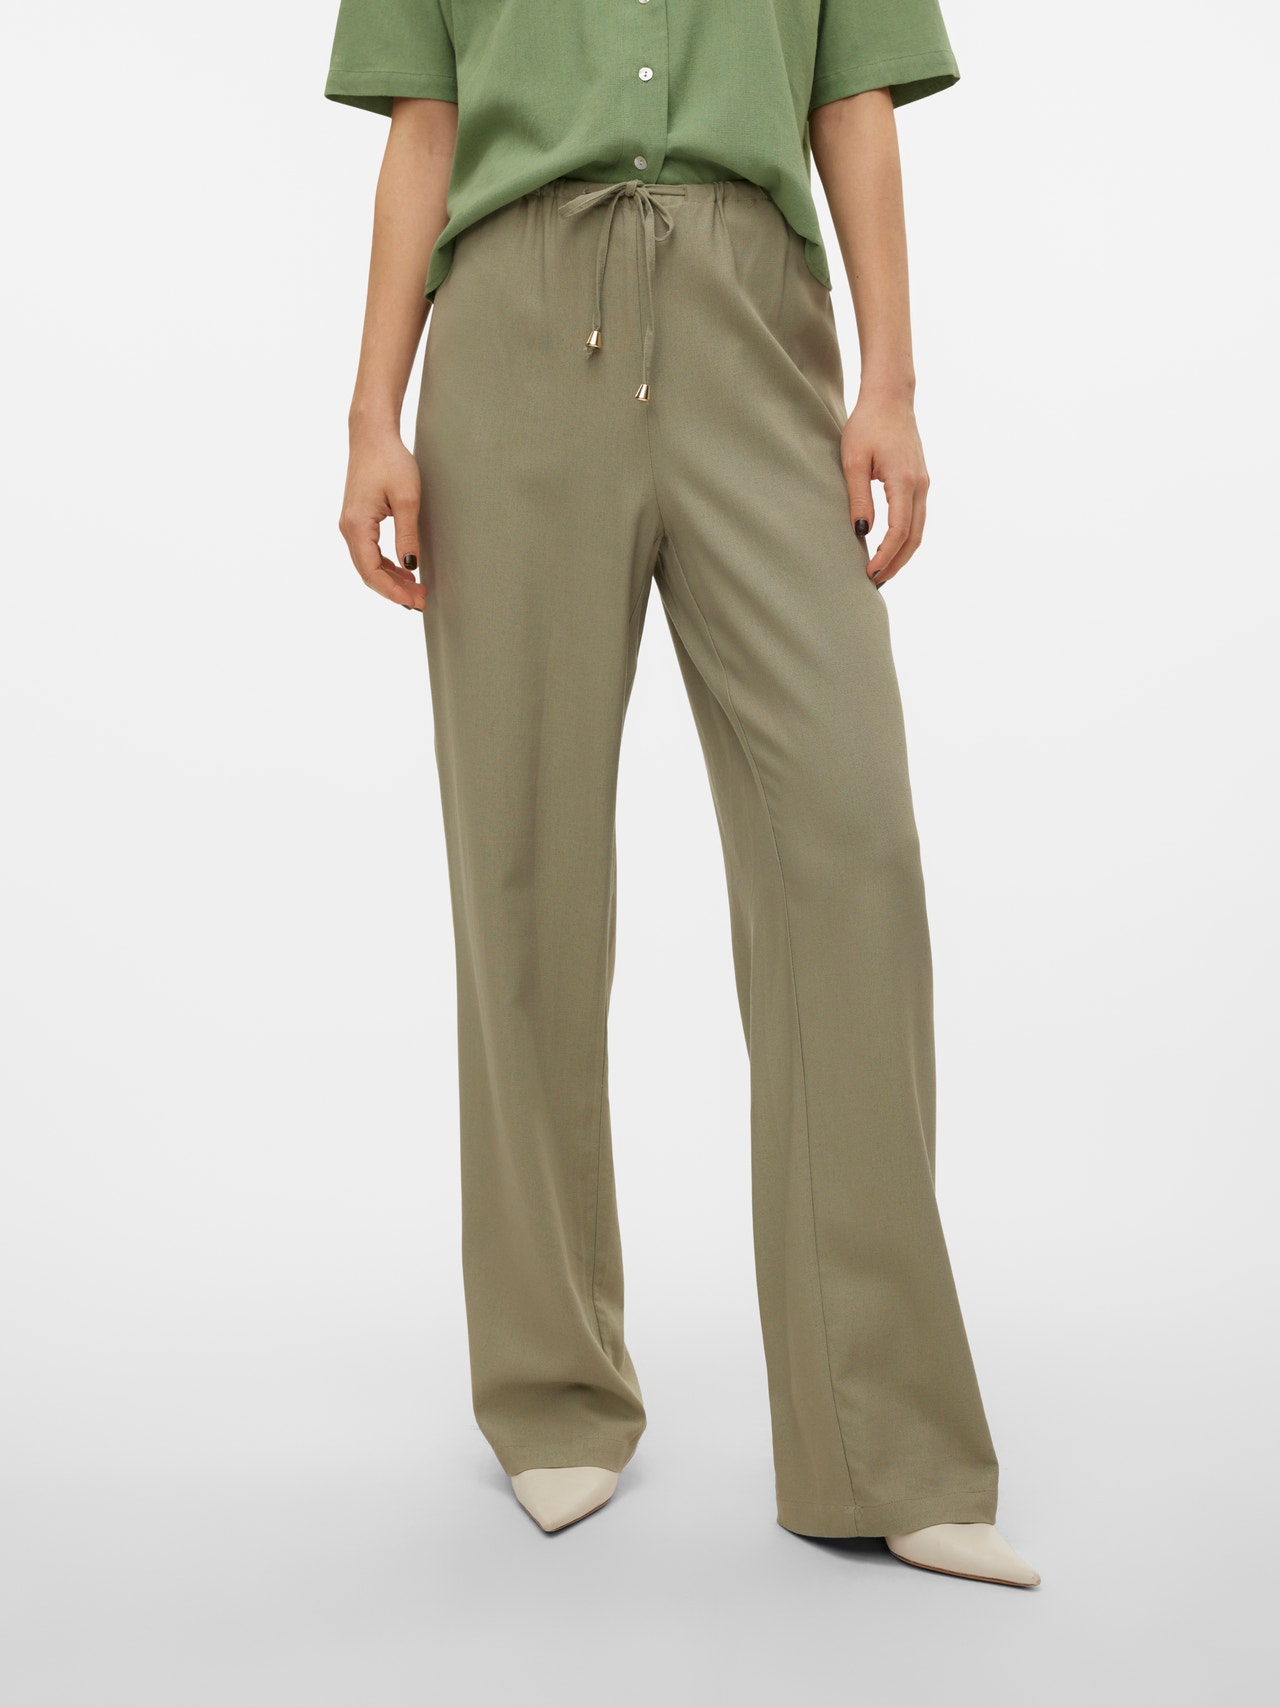 Vero Moda VMDINNA Spodnie -Laurel Oak - 10313929